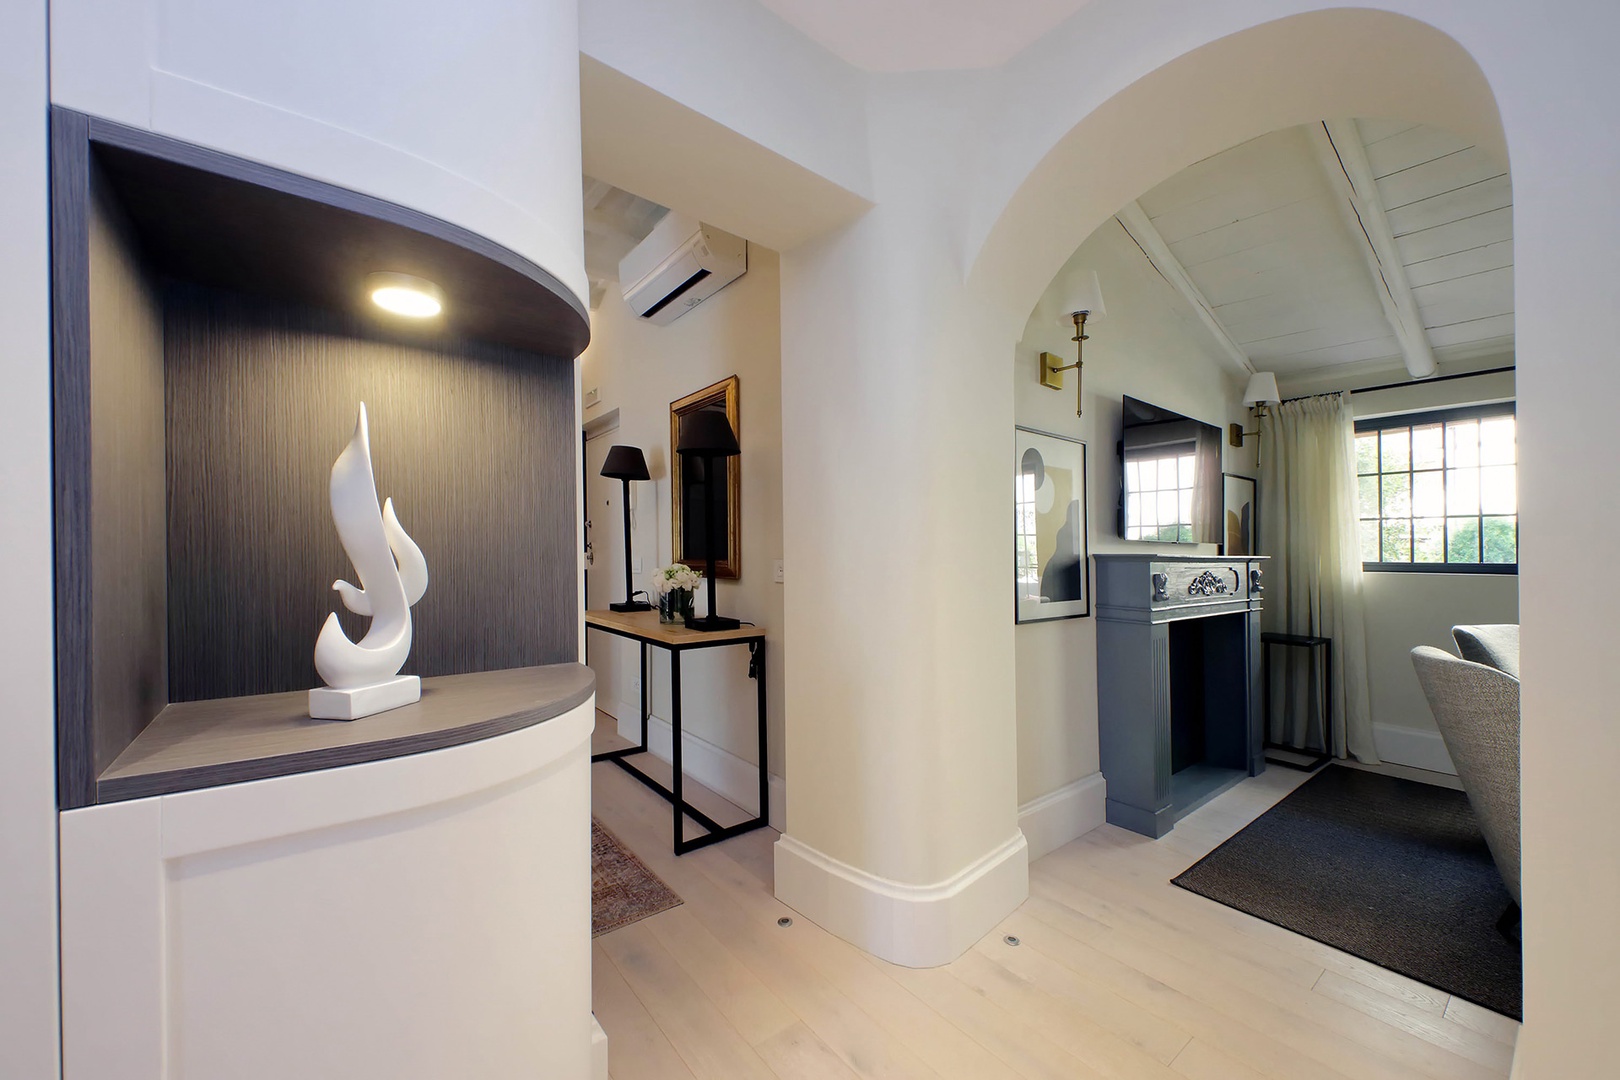 Unique décor and architecture add to the charm of the Sonata apartment.